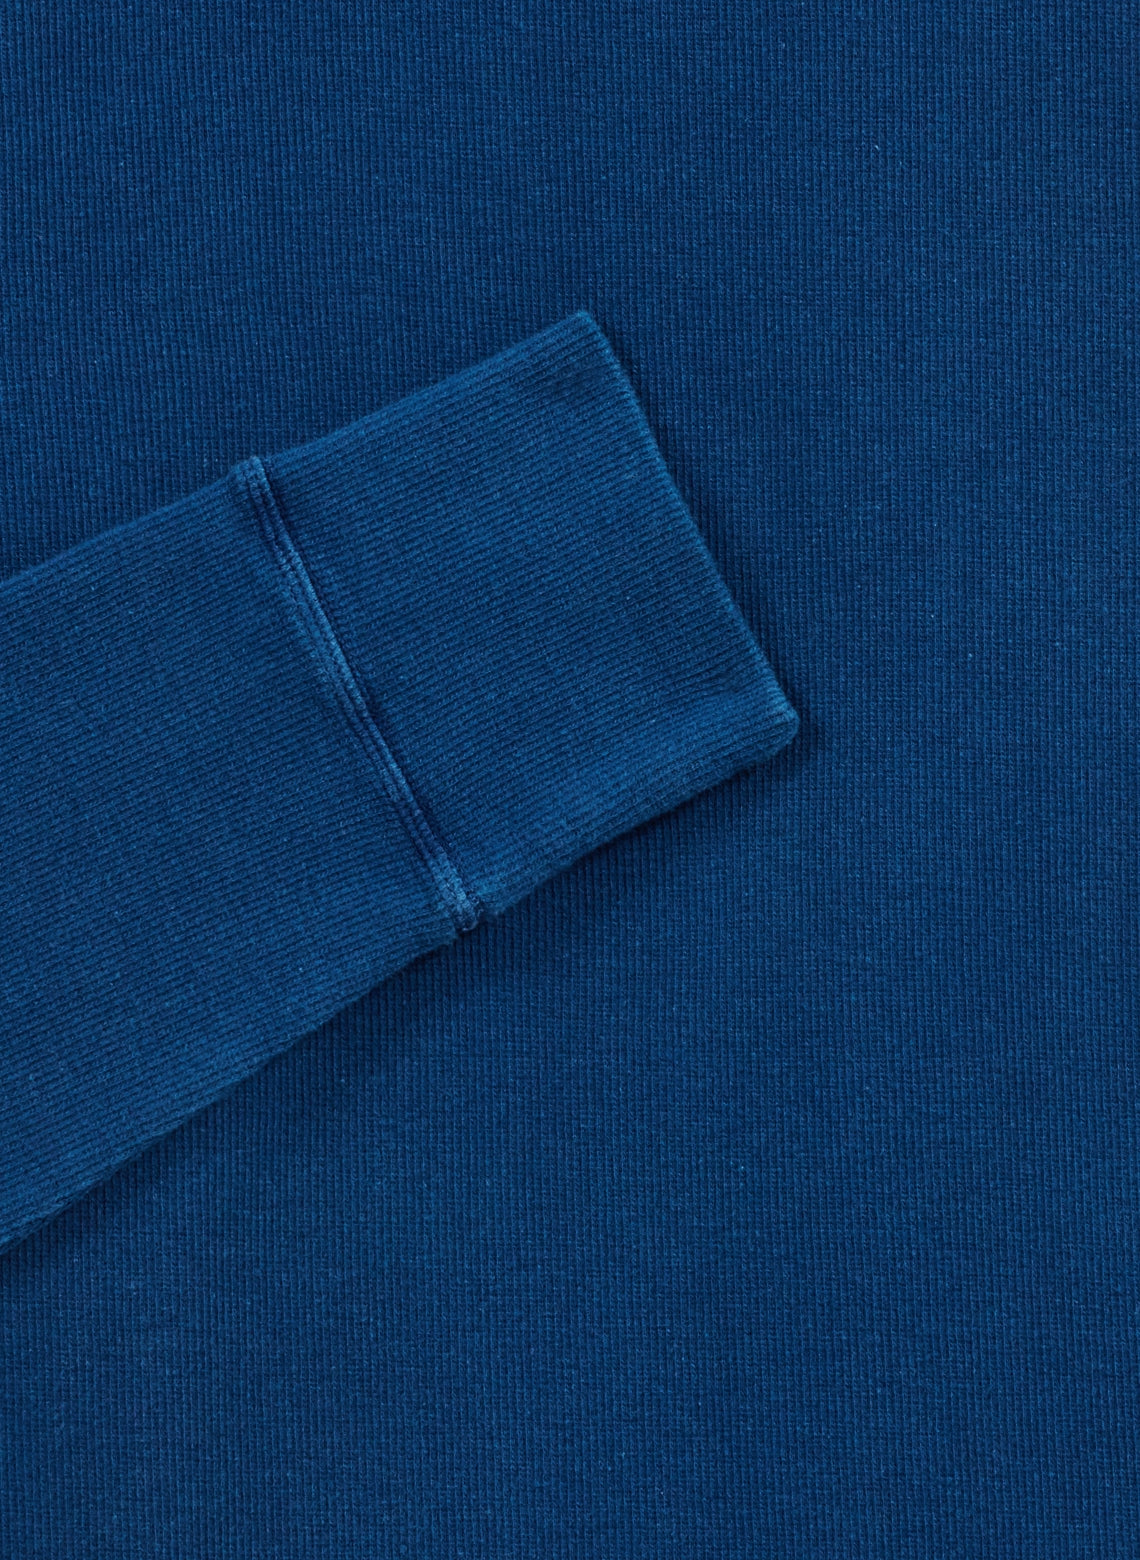 T-Shirt Teint à la Main Manches Longues Blue Indigo